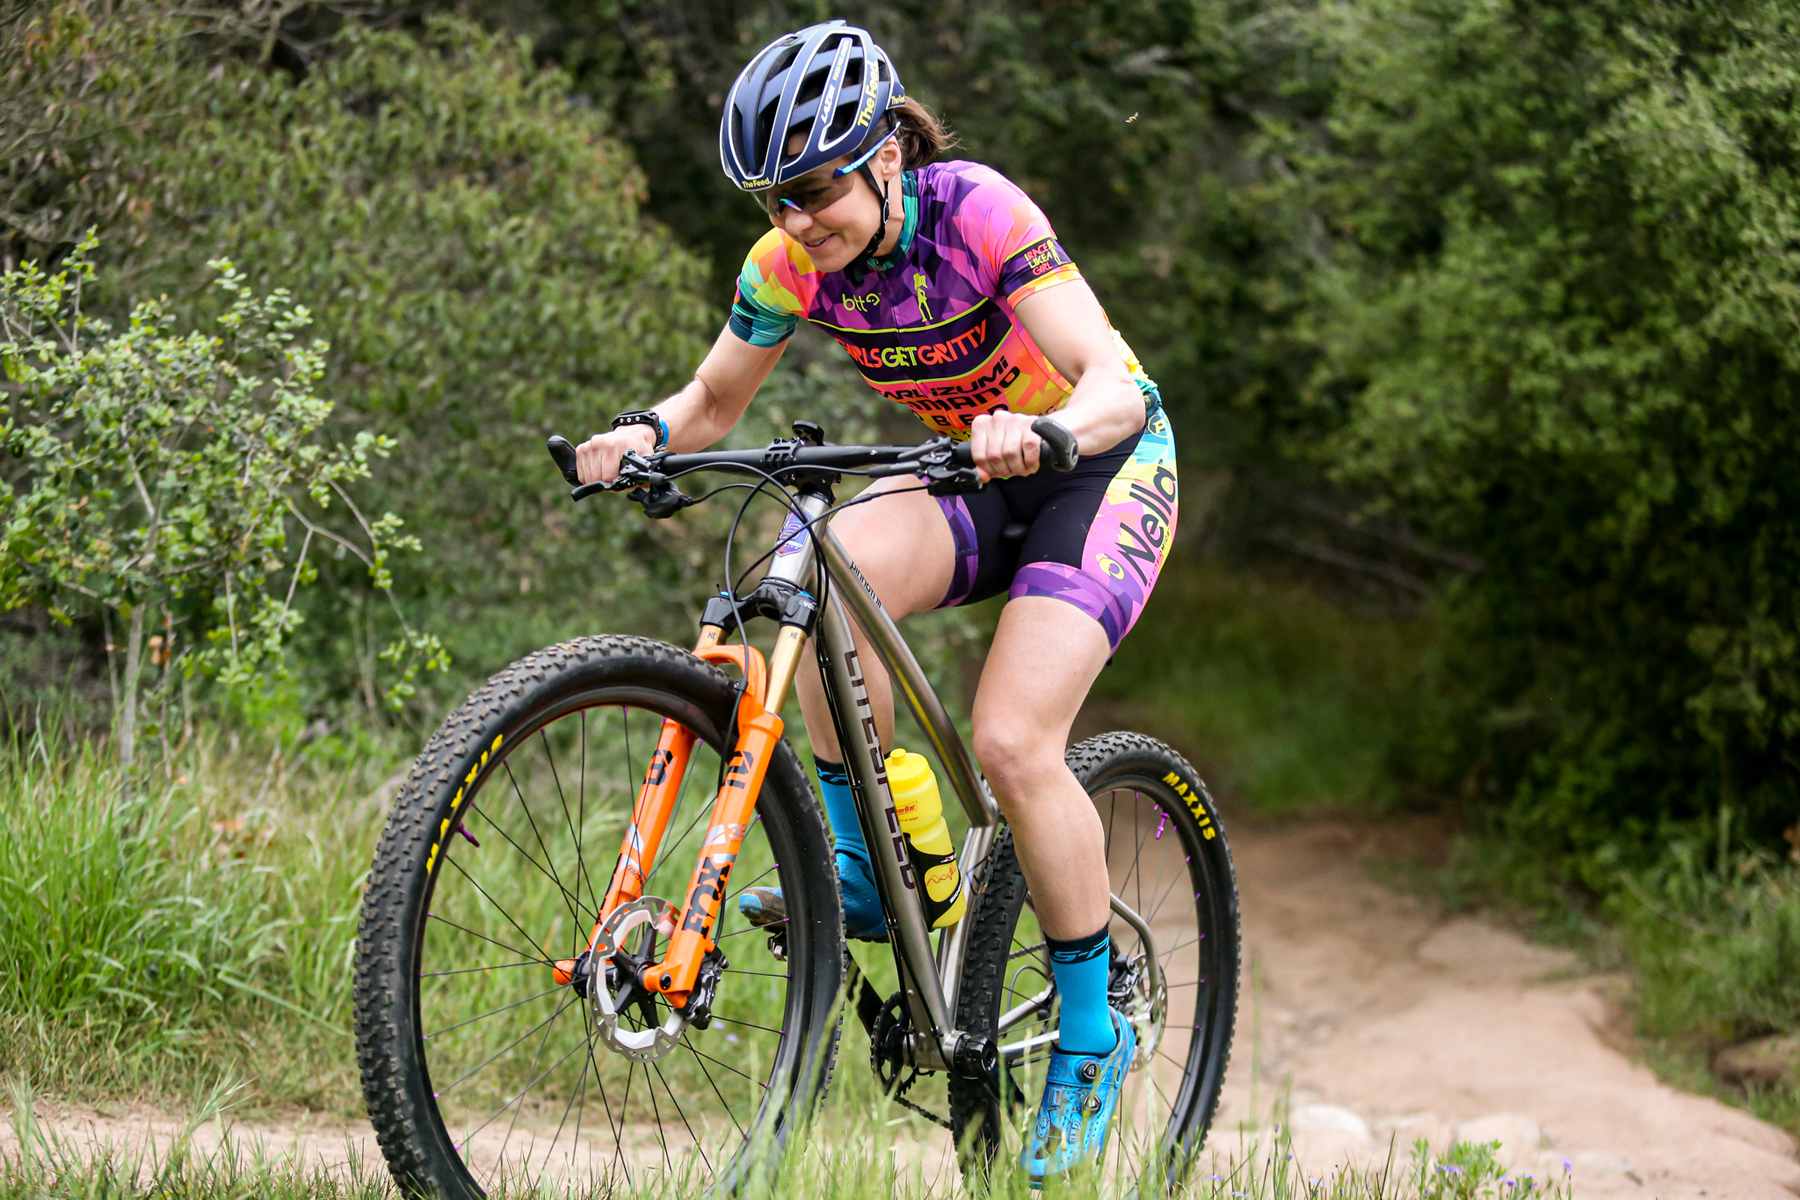 Angela Naeth racing her mountain bike